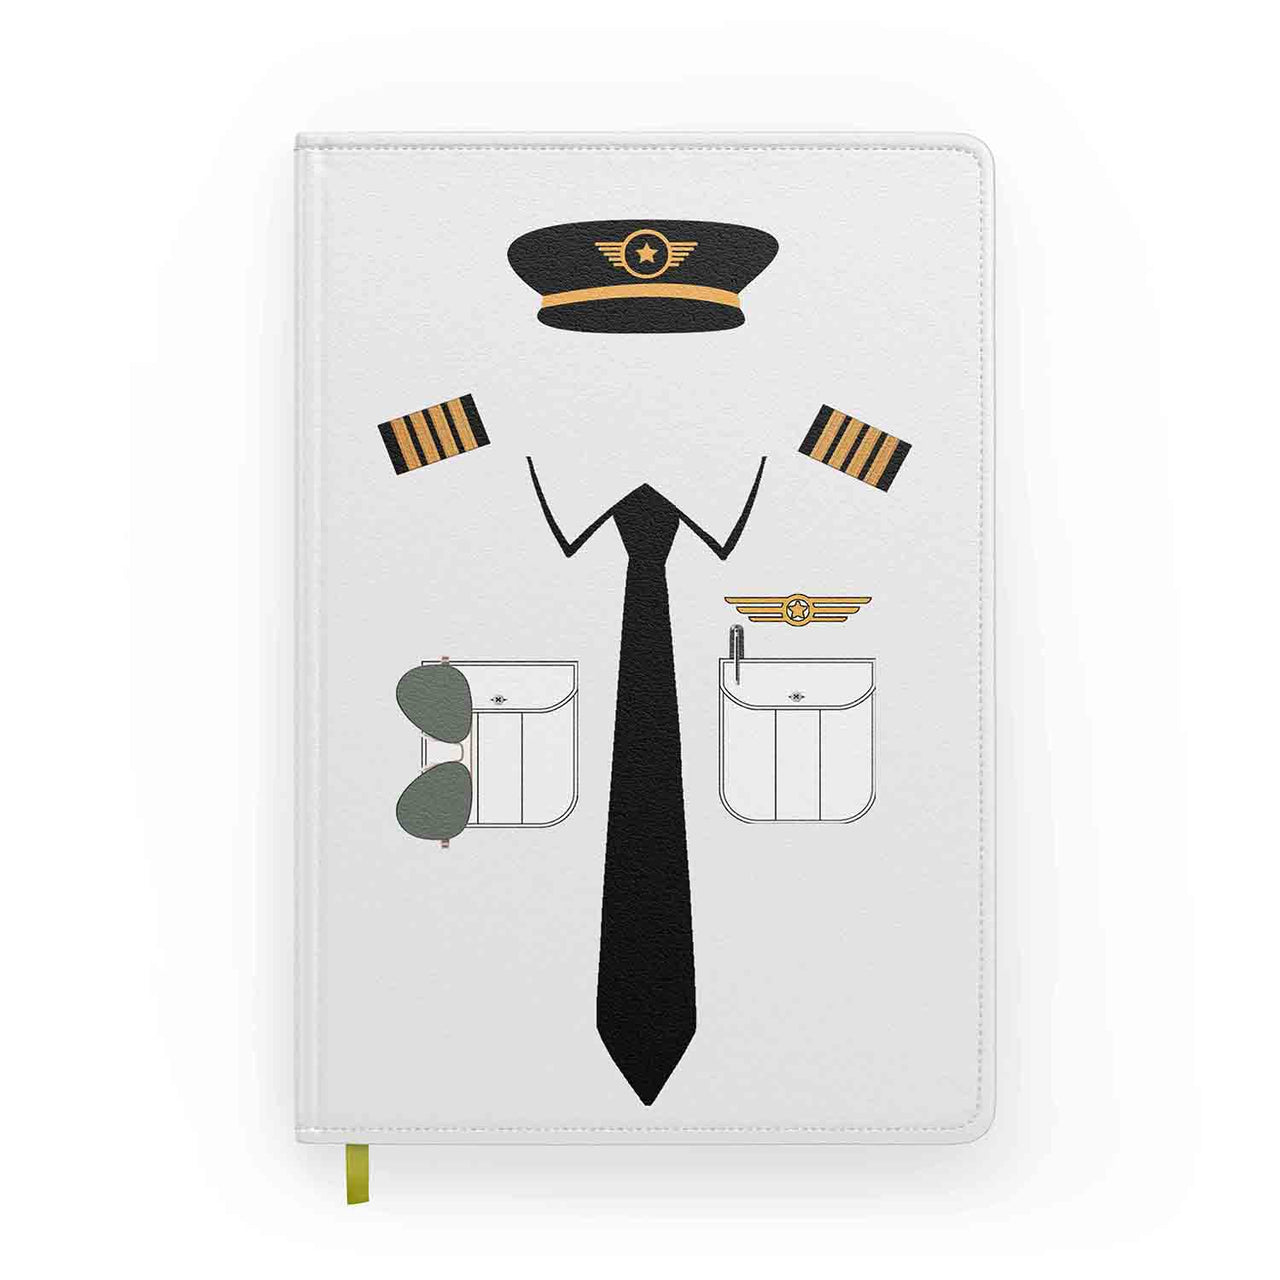 Customizable Name & Pilot Uniform Designed Notebooks